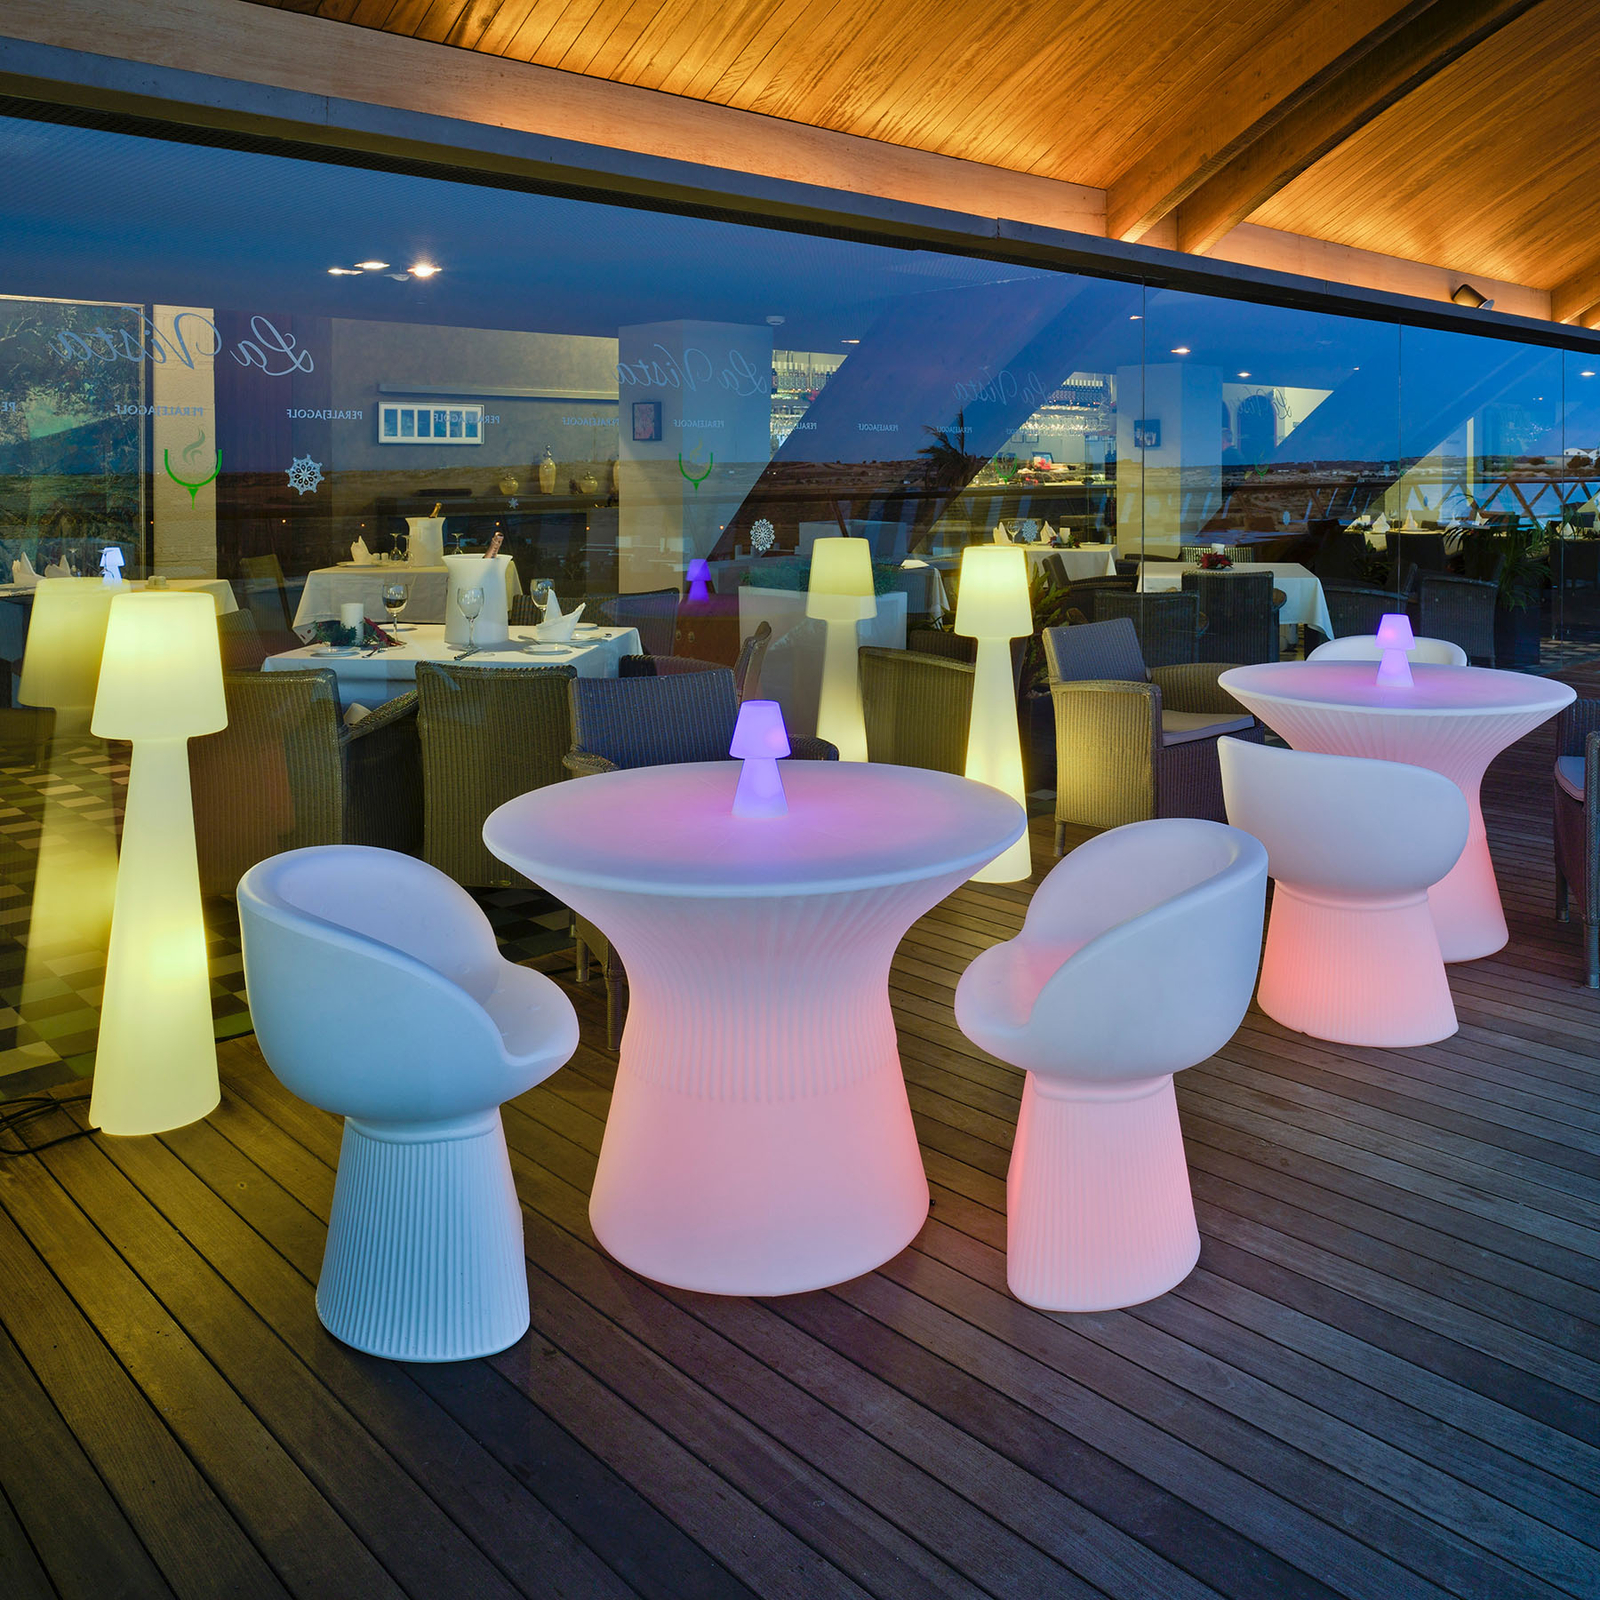 Newgarden Capri LED Table, hauteur 73 cm